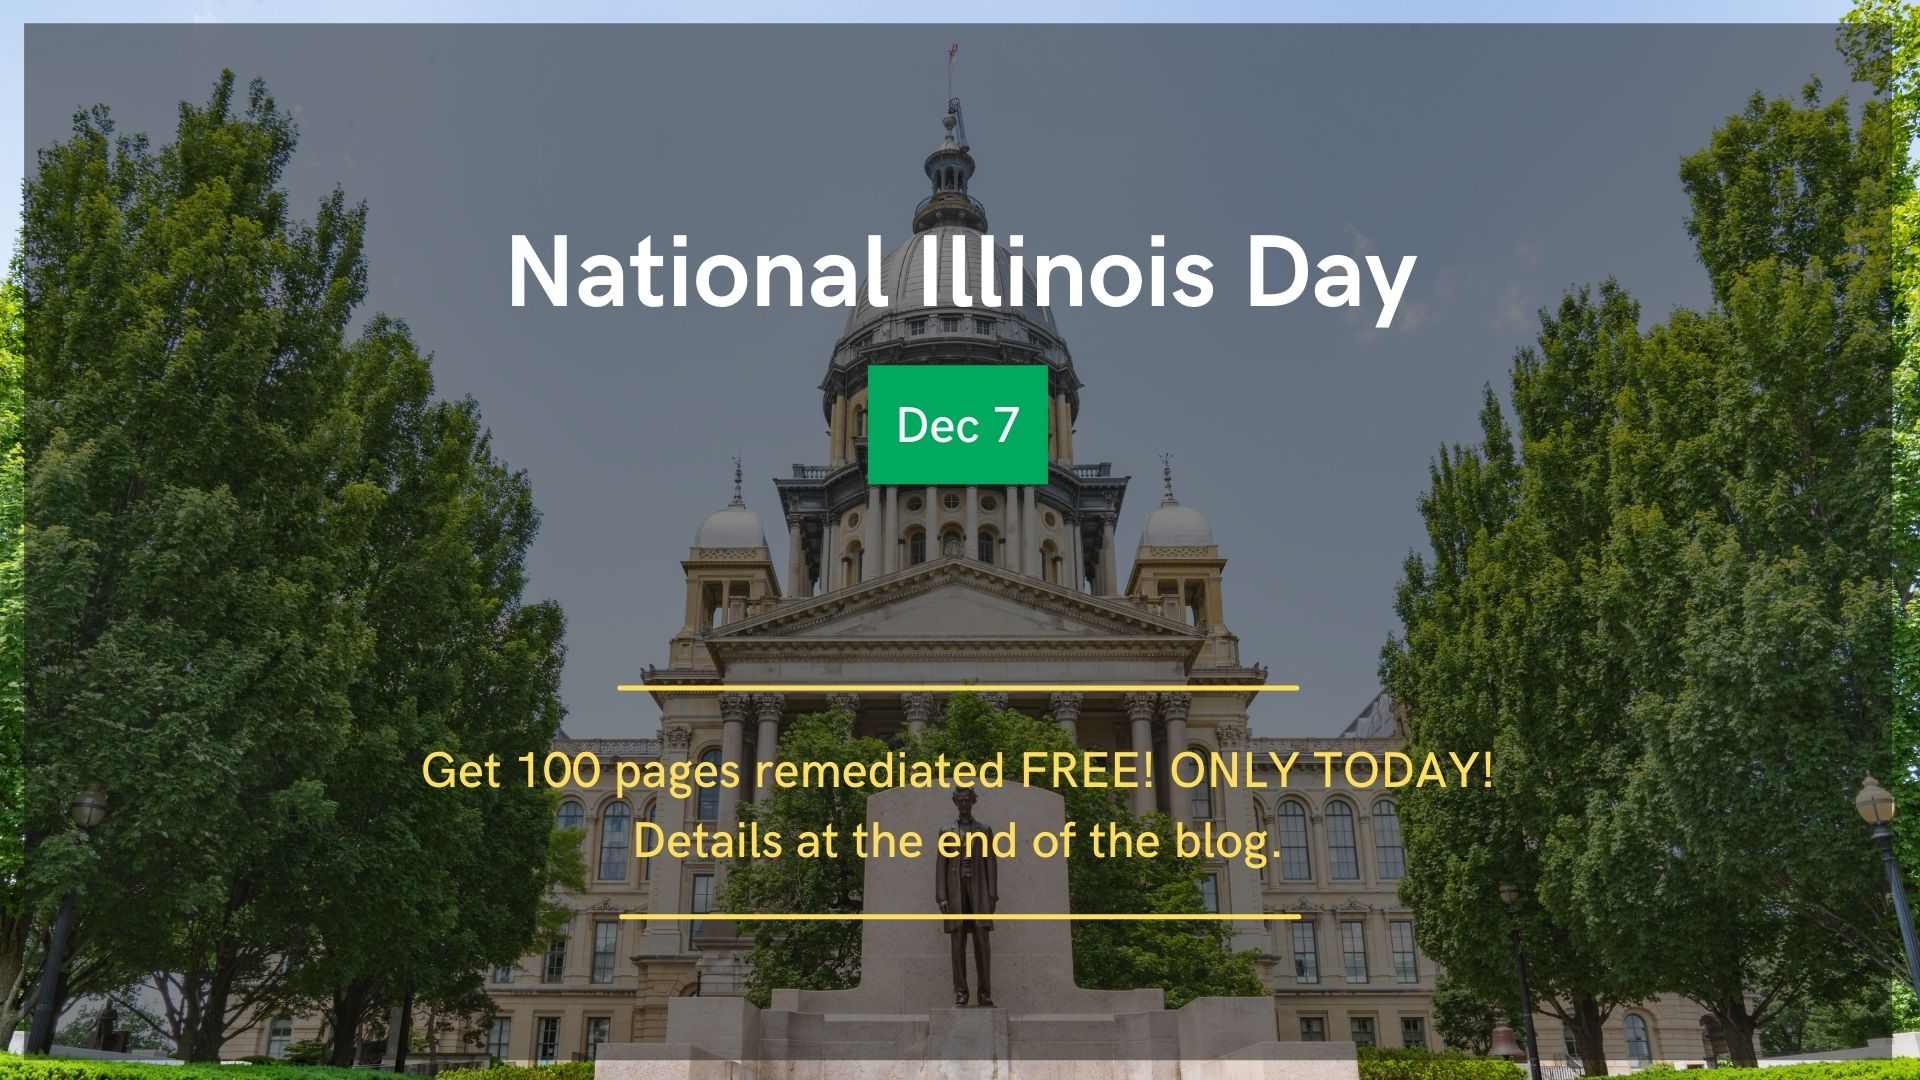 National Illinois Day - Remediation